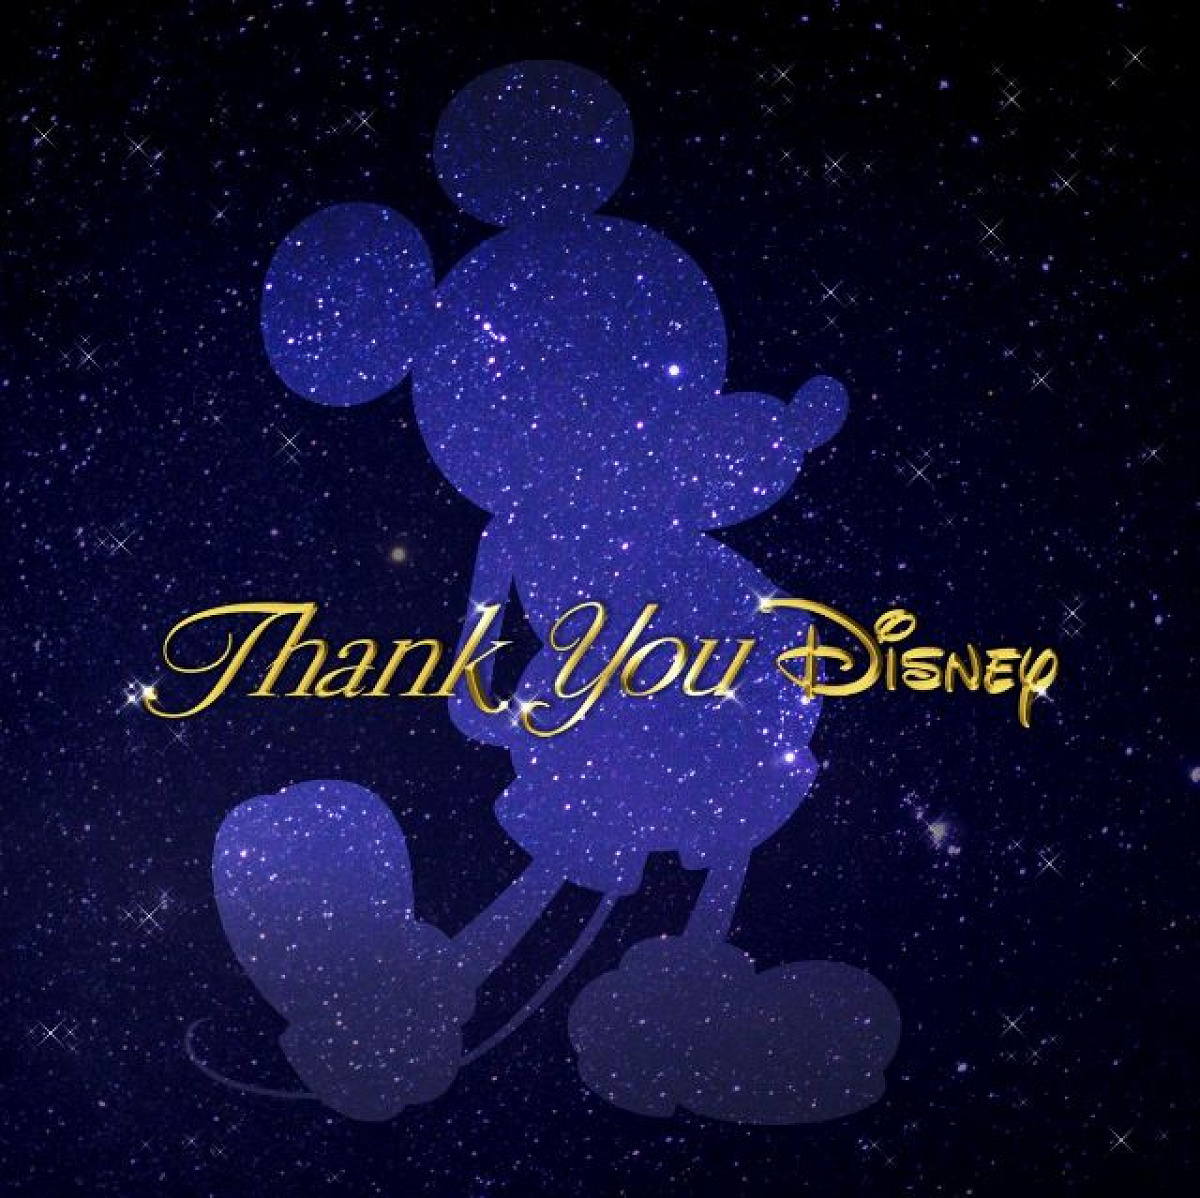 「Thank You Disney」